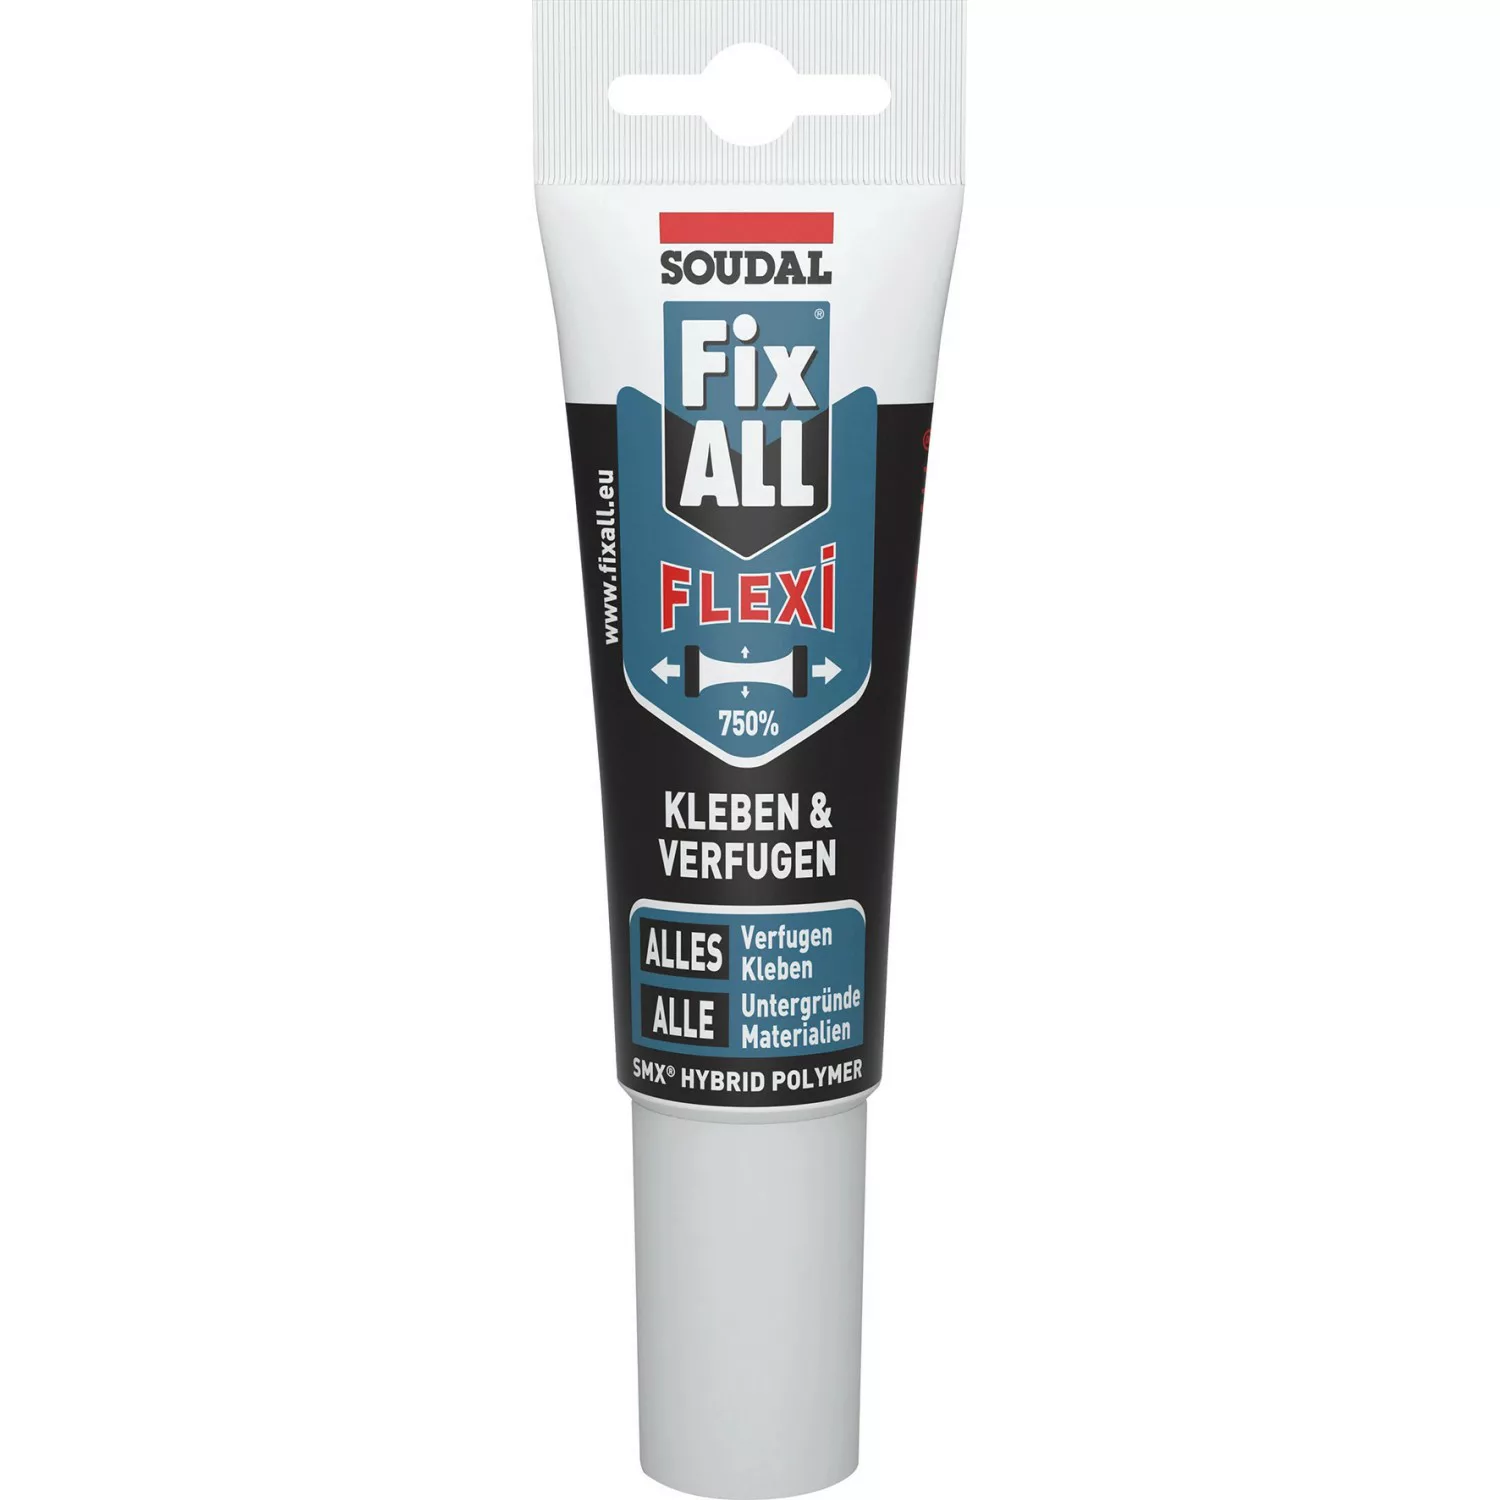 Soudal Fix All Flexi Weiß 200 g günstig online kaufen